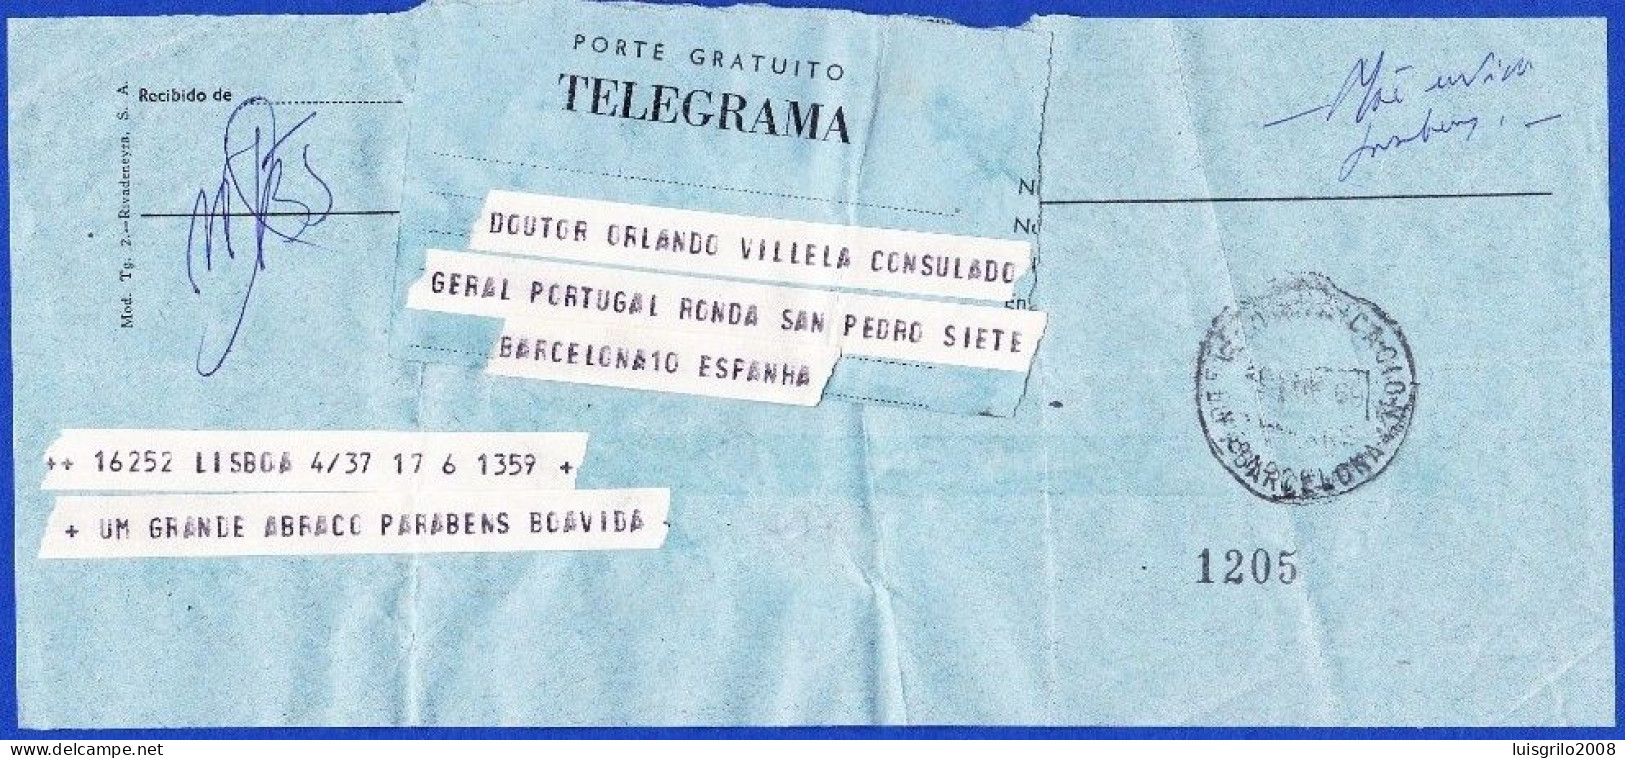 Telegrama Internacional - Lisboa > Consulado General De Portugal En Barcelona -|- Postmark - Barccelona. 1969 - Télégraphe